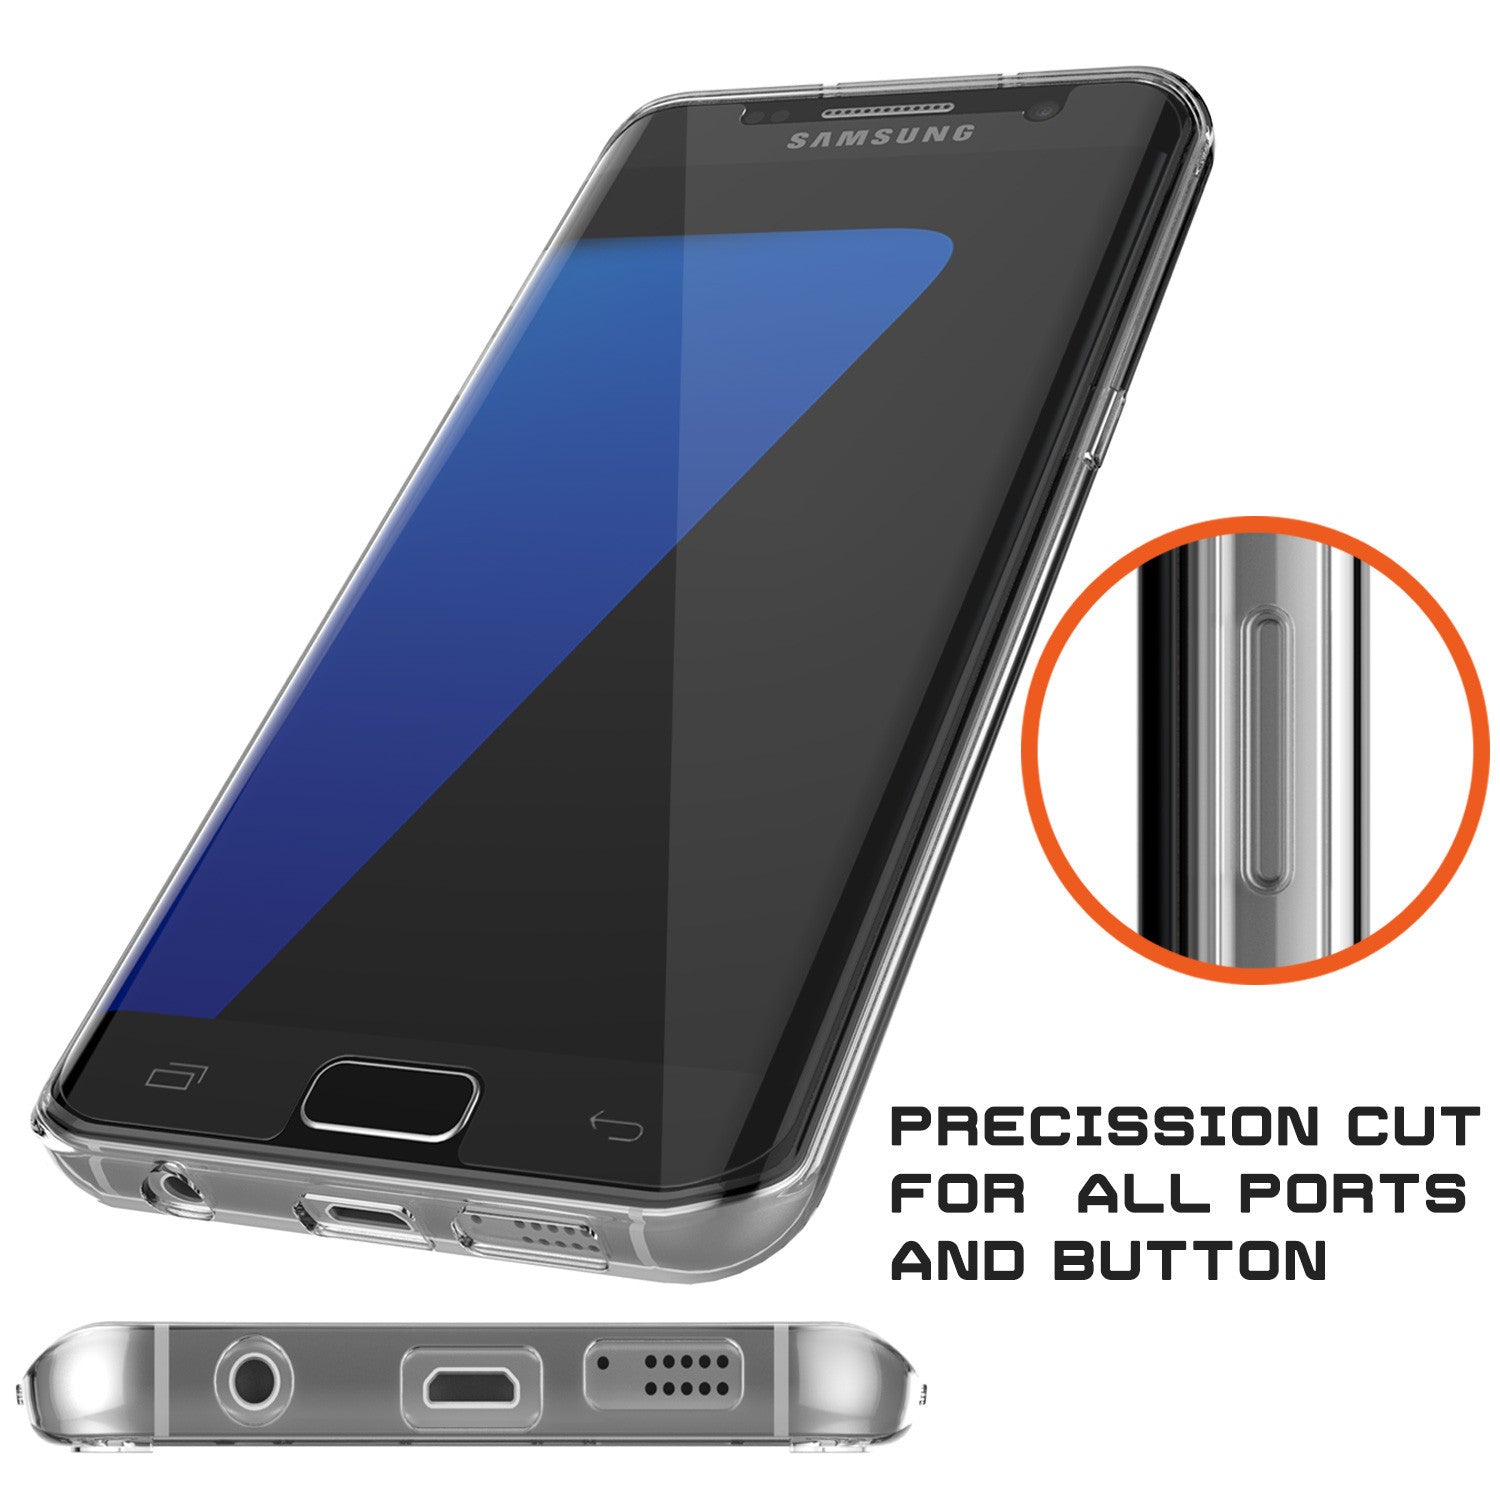 PUNKCASE - Lucid 2.0 Series Slick Frame Case for Samsung S7 Edge |Clear